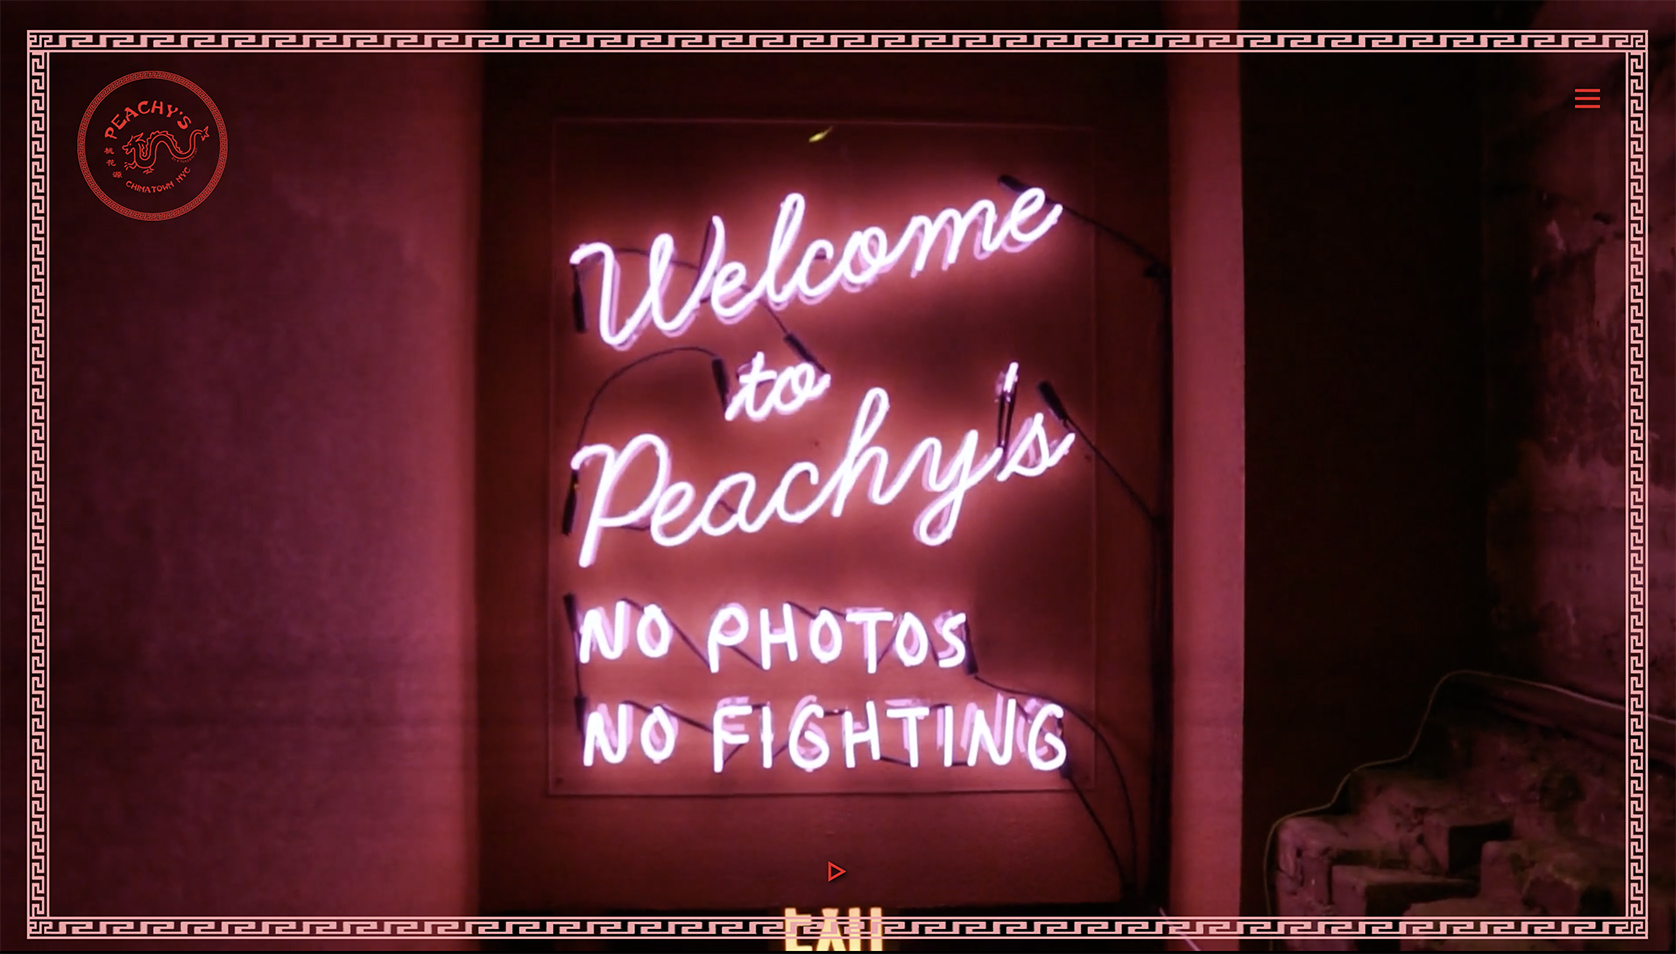 Mercer Hotel | Drinks, Peachy's, No photos no fighting